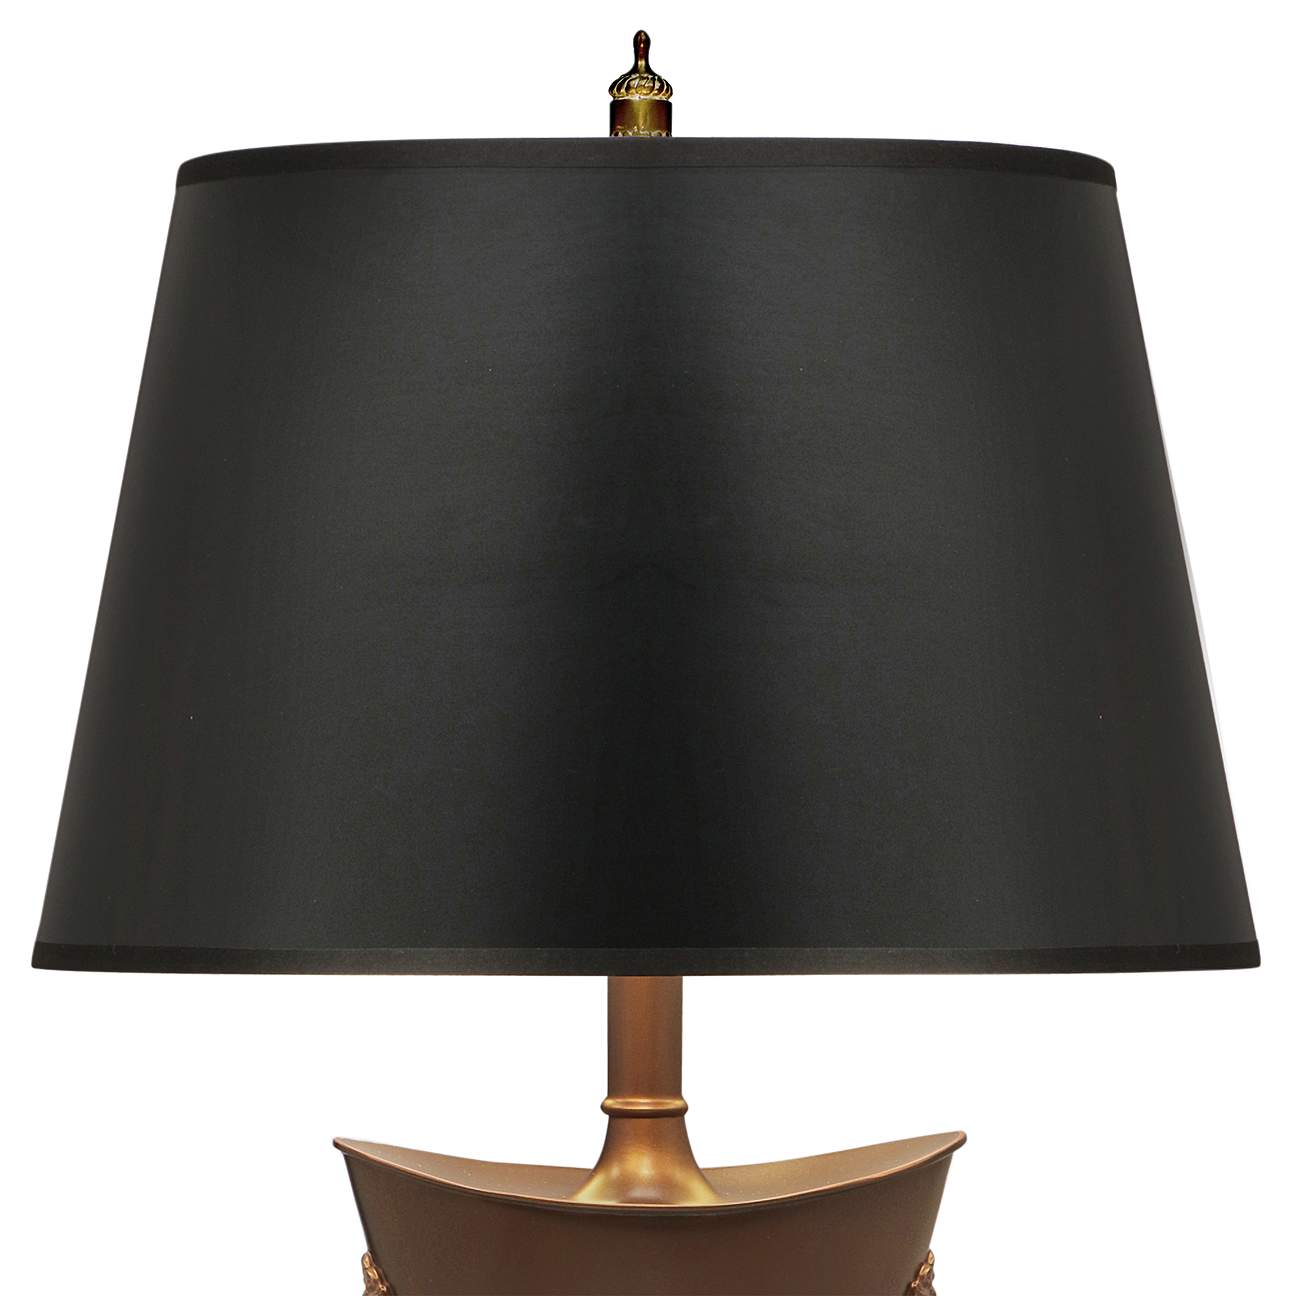 Stiffel Oxidized Bronze and Black Opaque Table Lamp - #509D0 | Lamps Plus